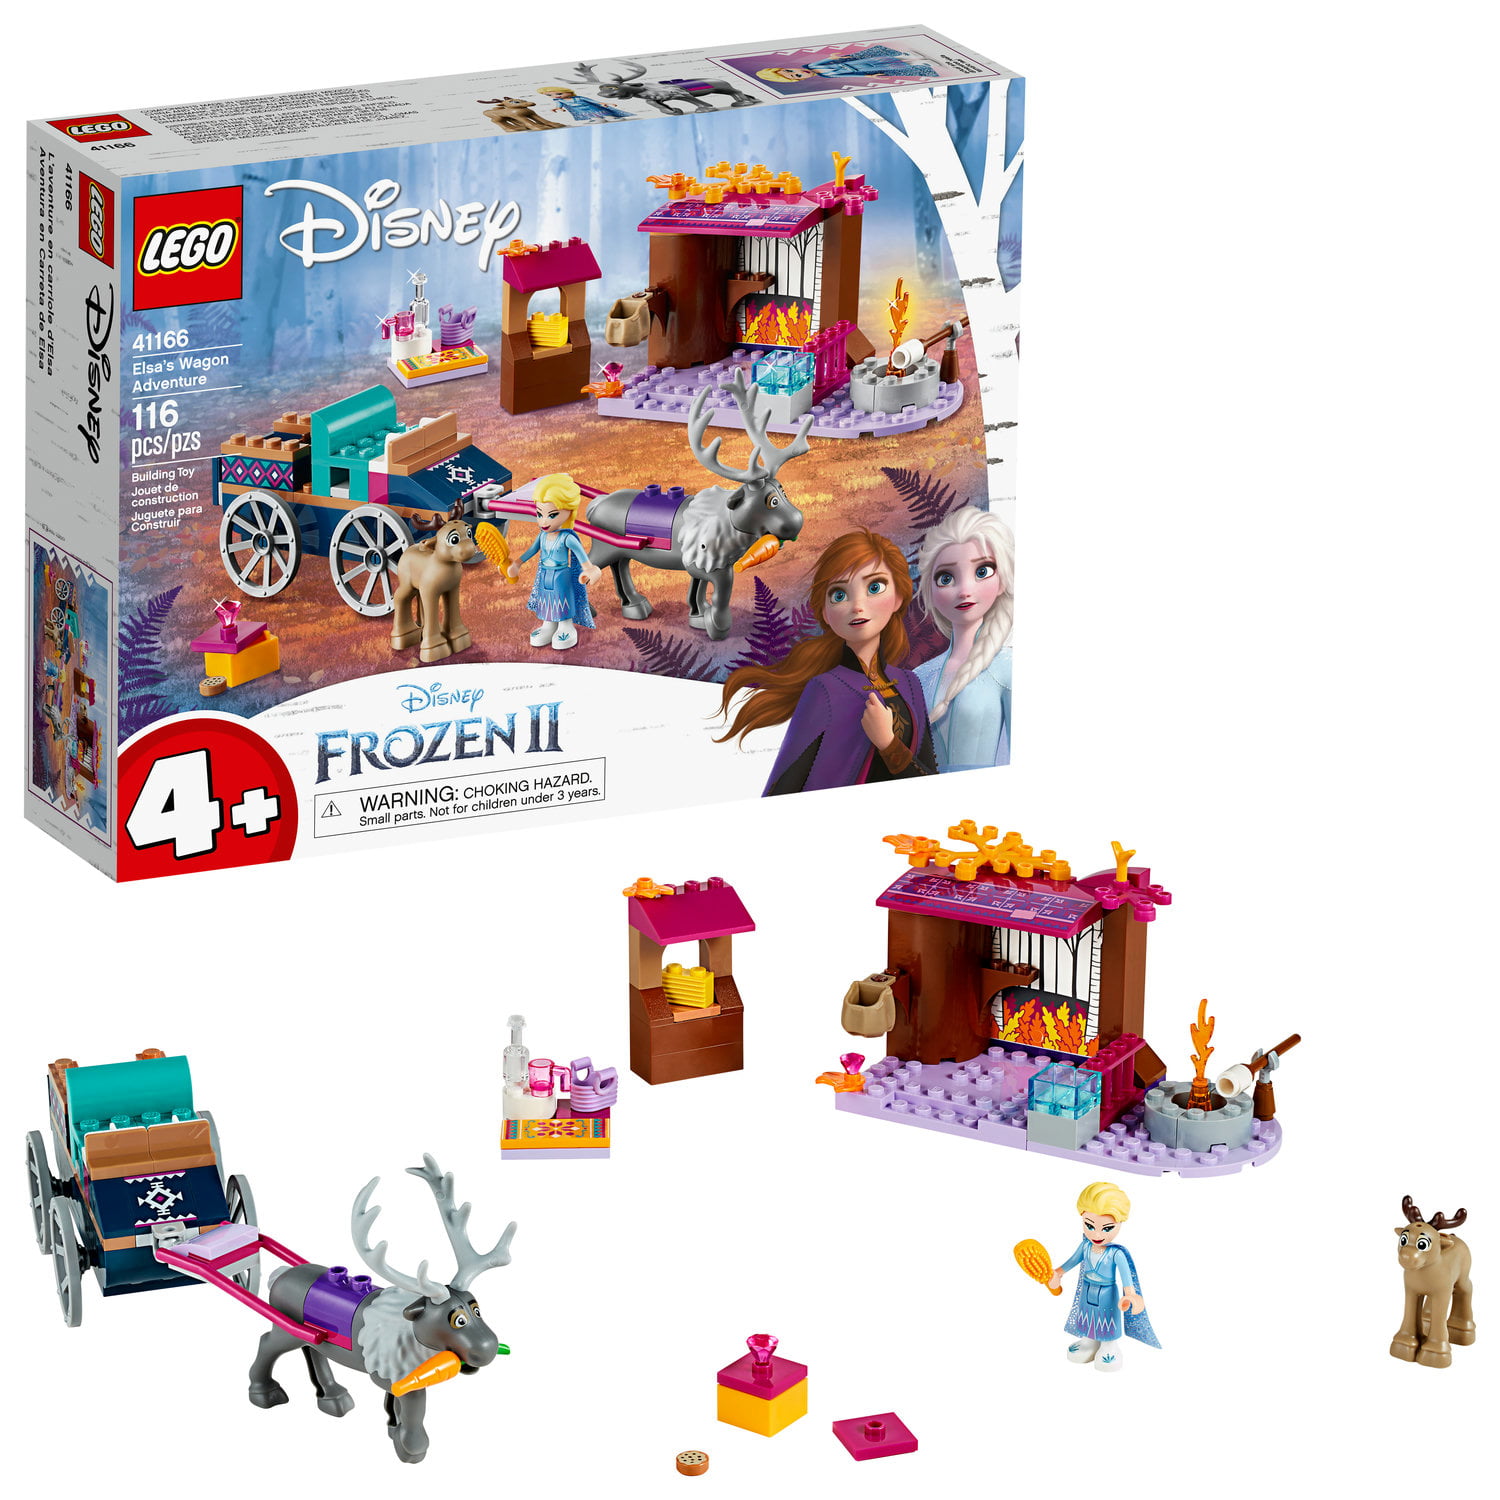 LEGO Elsa Frozen II Mini-Doll Minifigure DP069 Elsa's Wagon Adventure 41166 NEW 